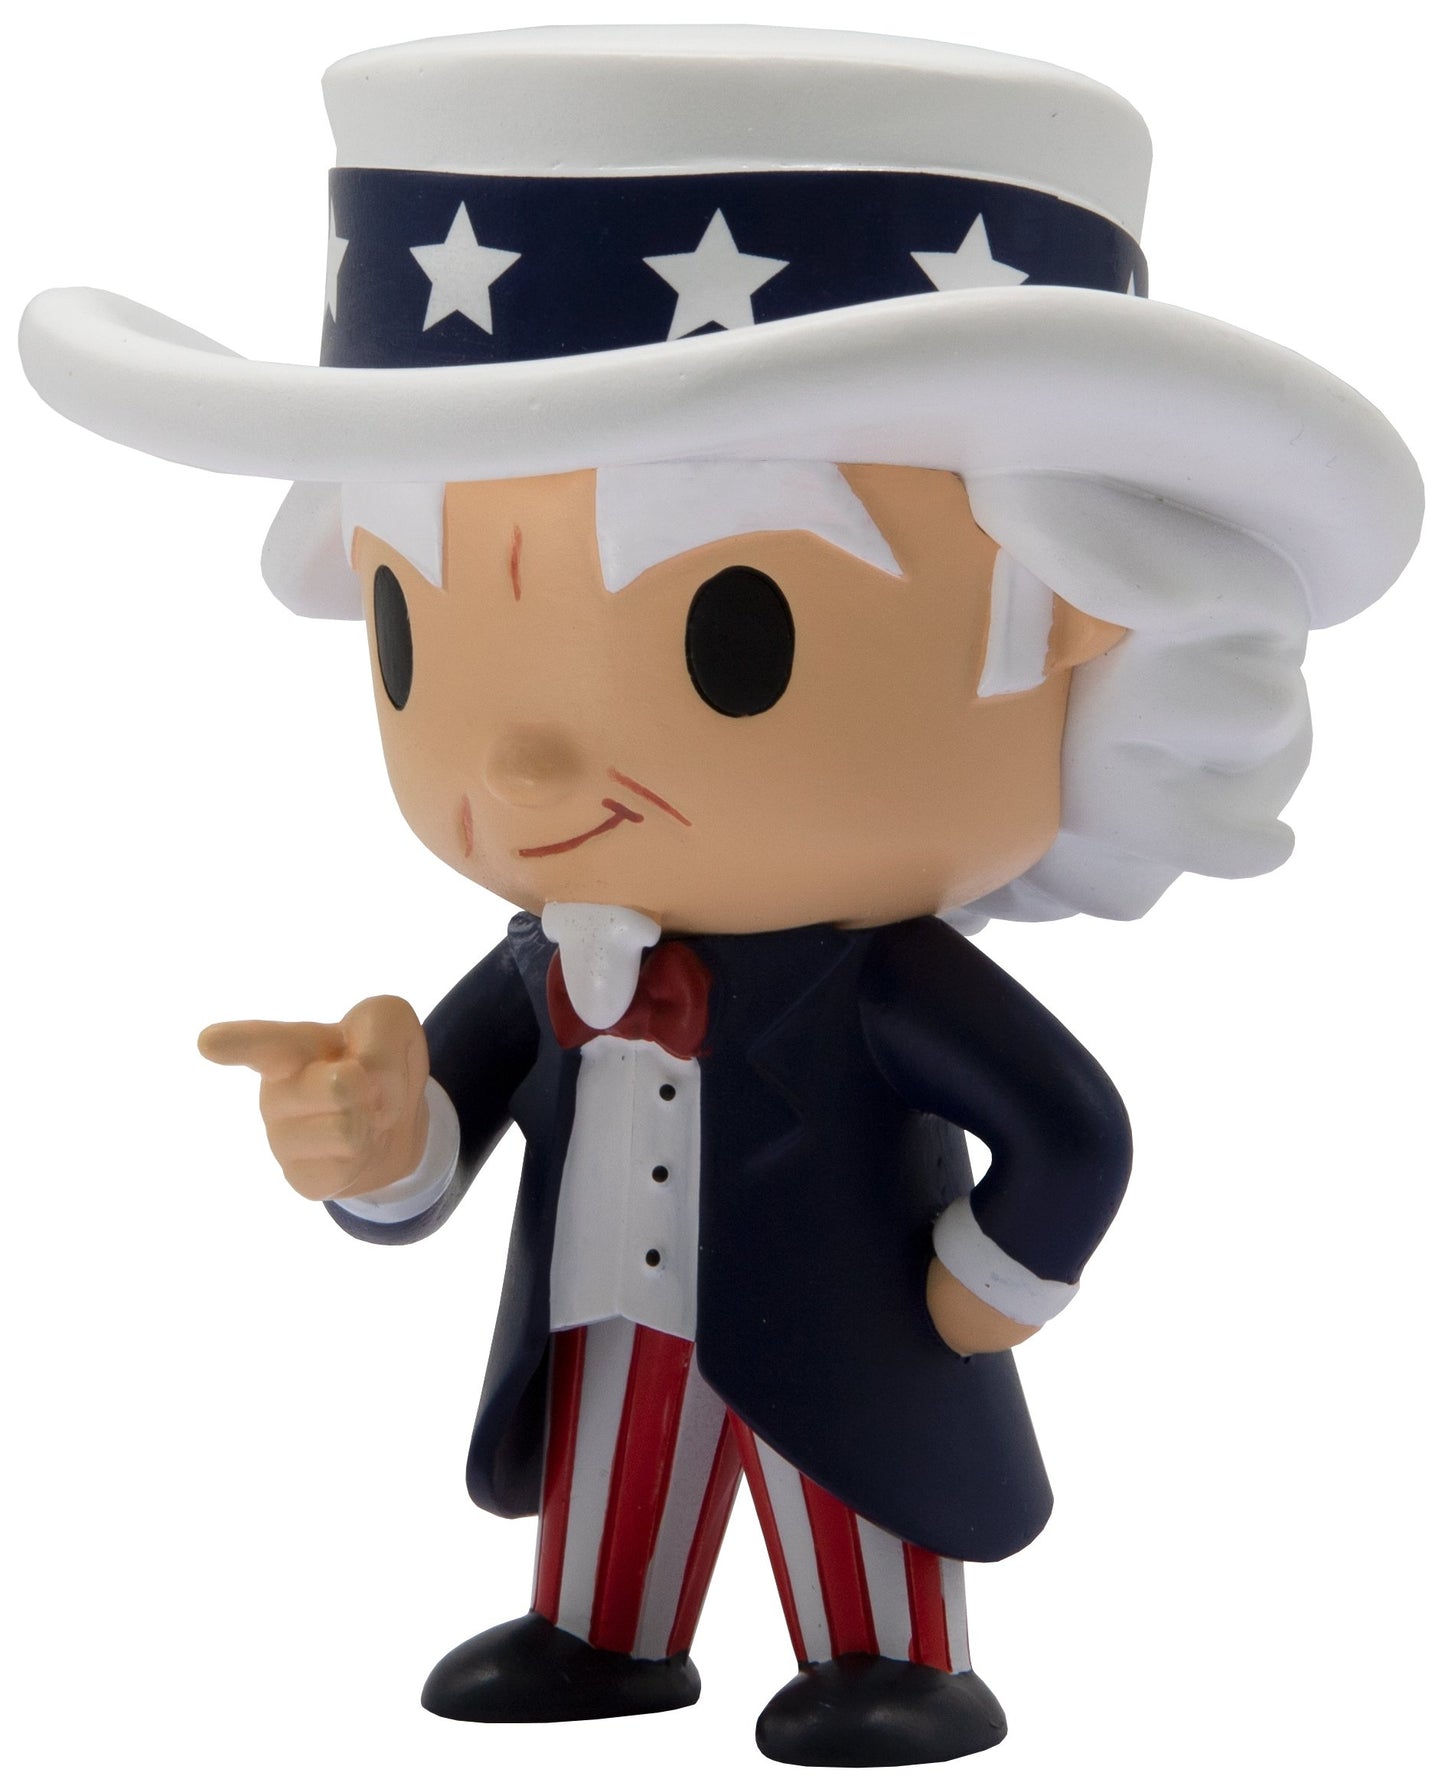 Pocket Patriot #2 - Uncle Sam - Proud Patriots